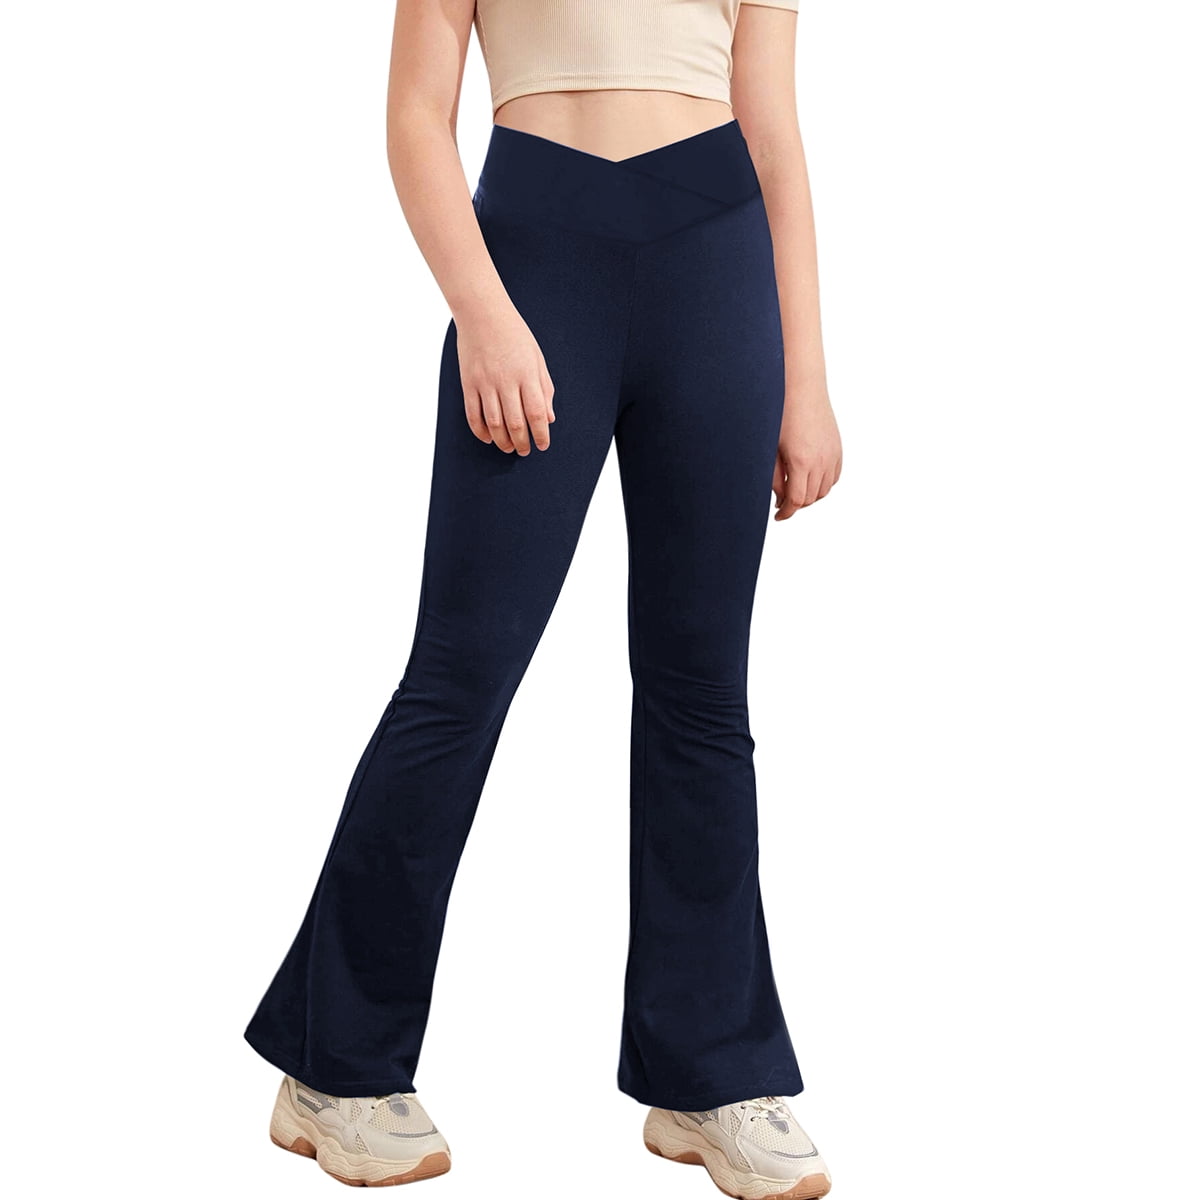 Cindysus Bootcut Workout Yoga Pants for Women High Waist Flare Leg Pants  Trousers Dark Blue 2XL 